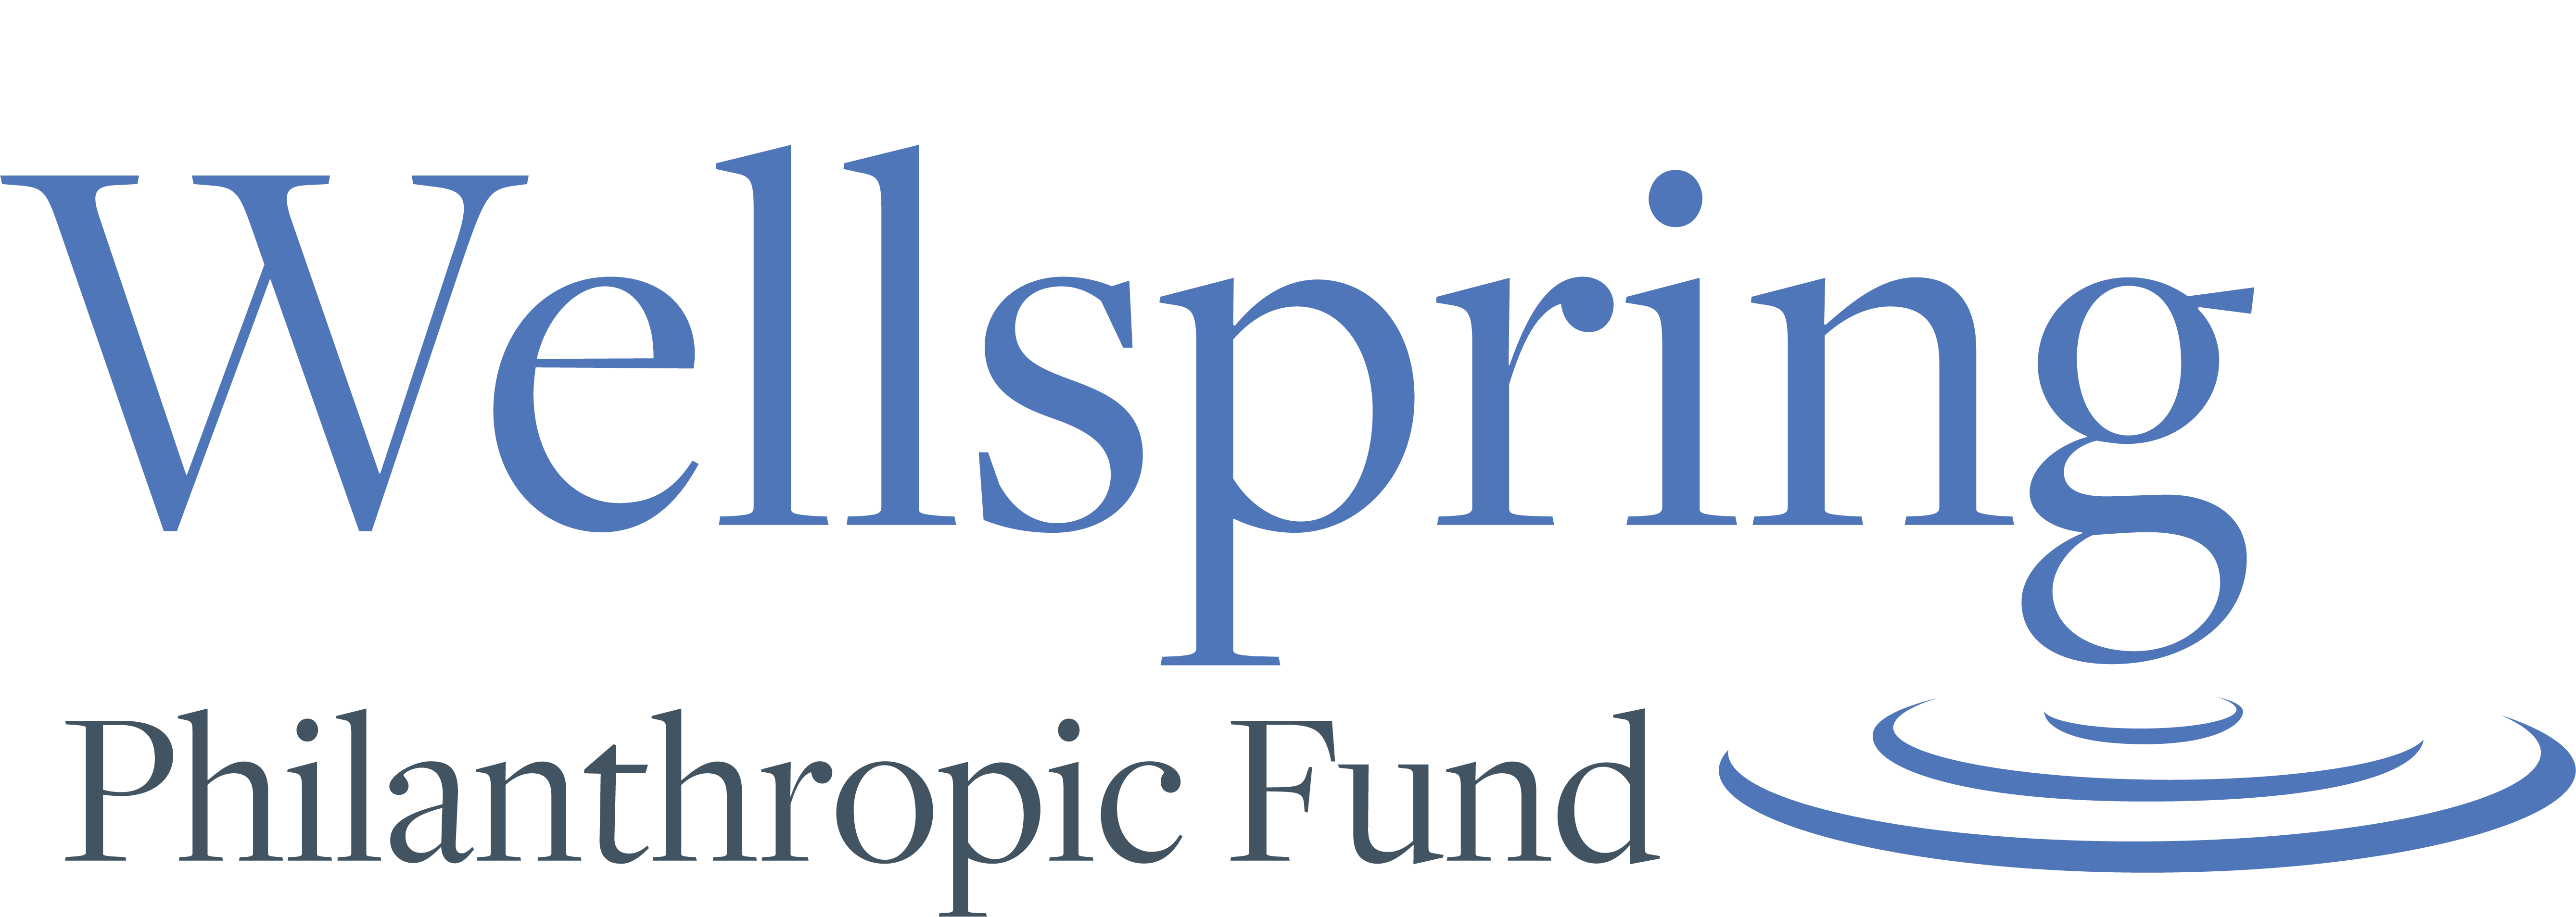 Wellspring Philanthropic Fund logo